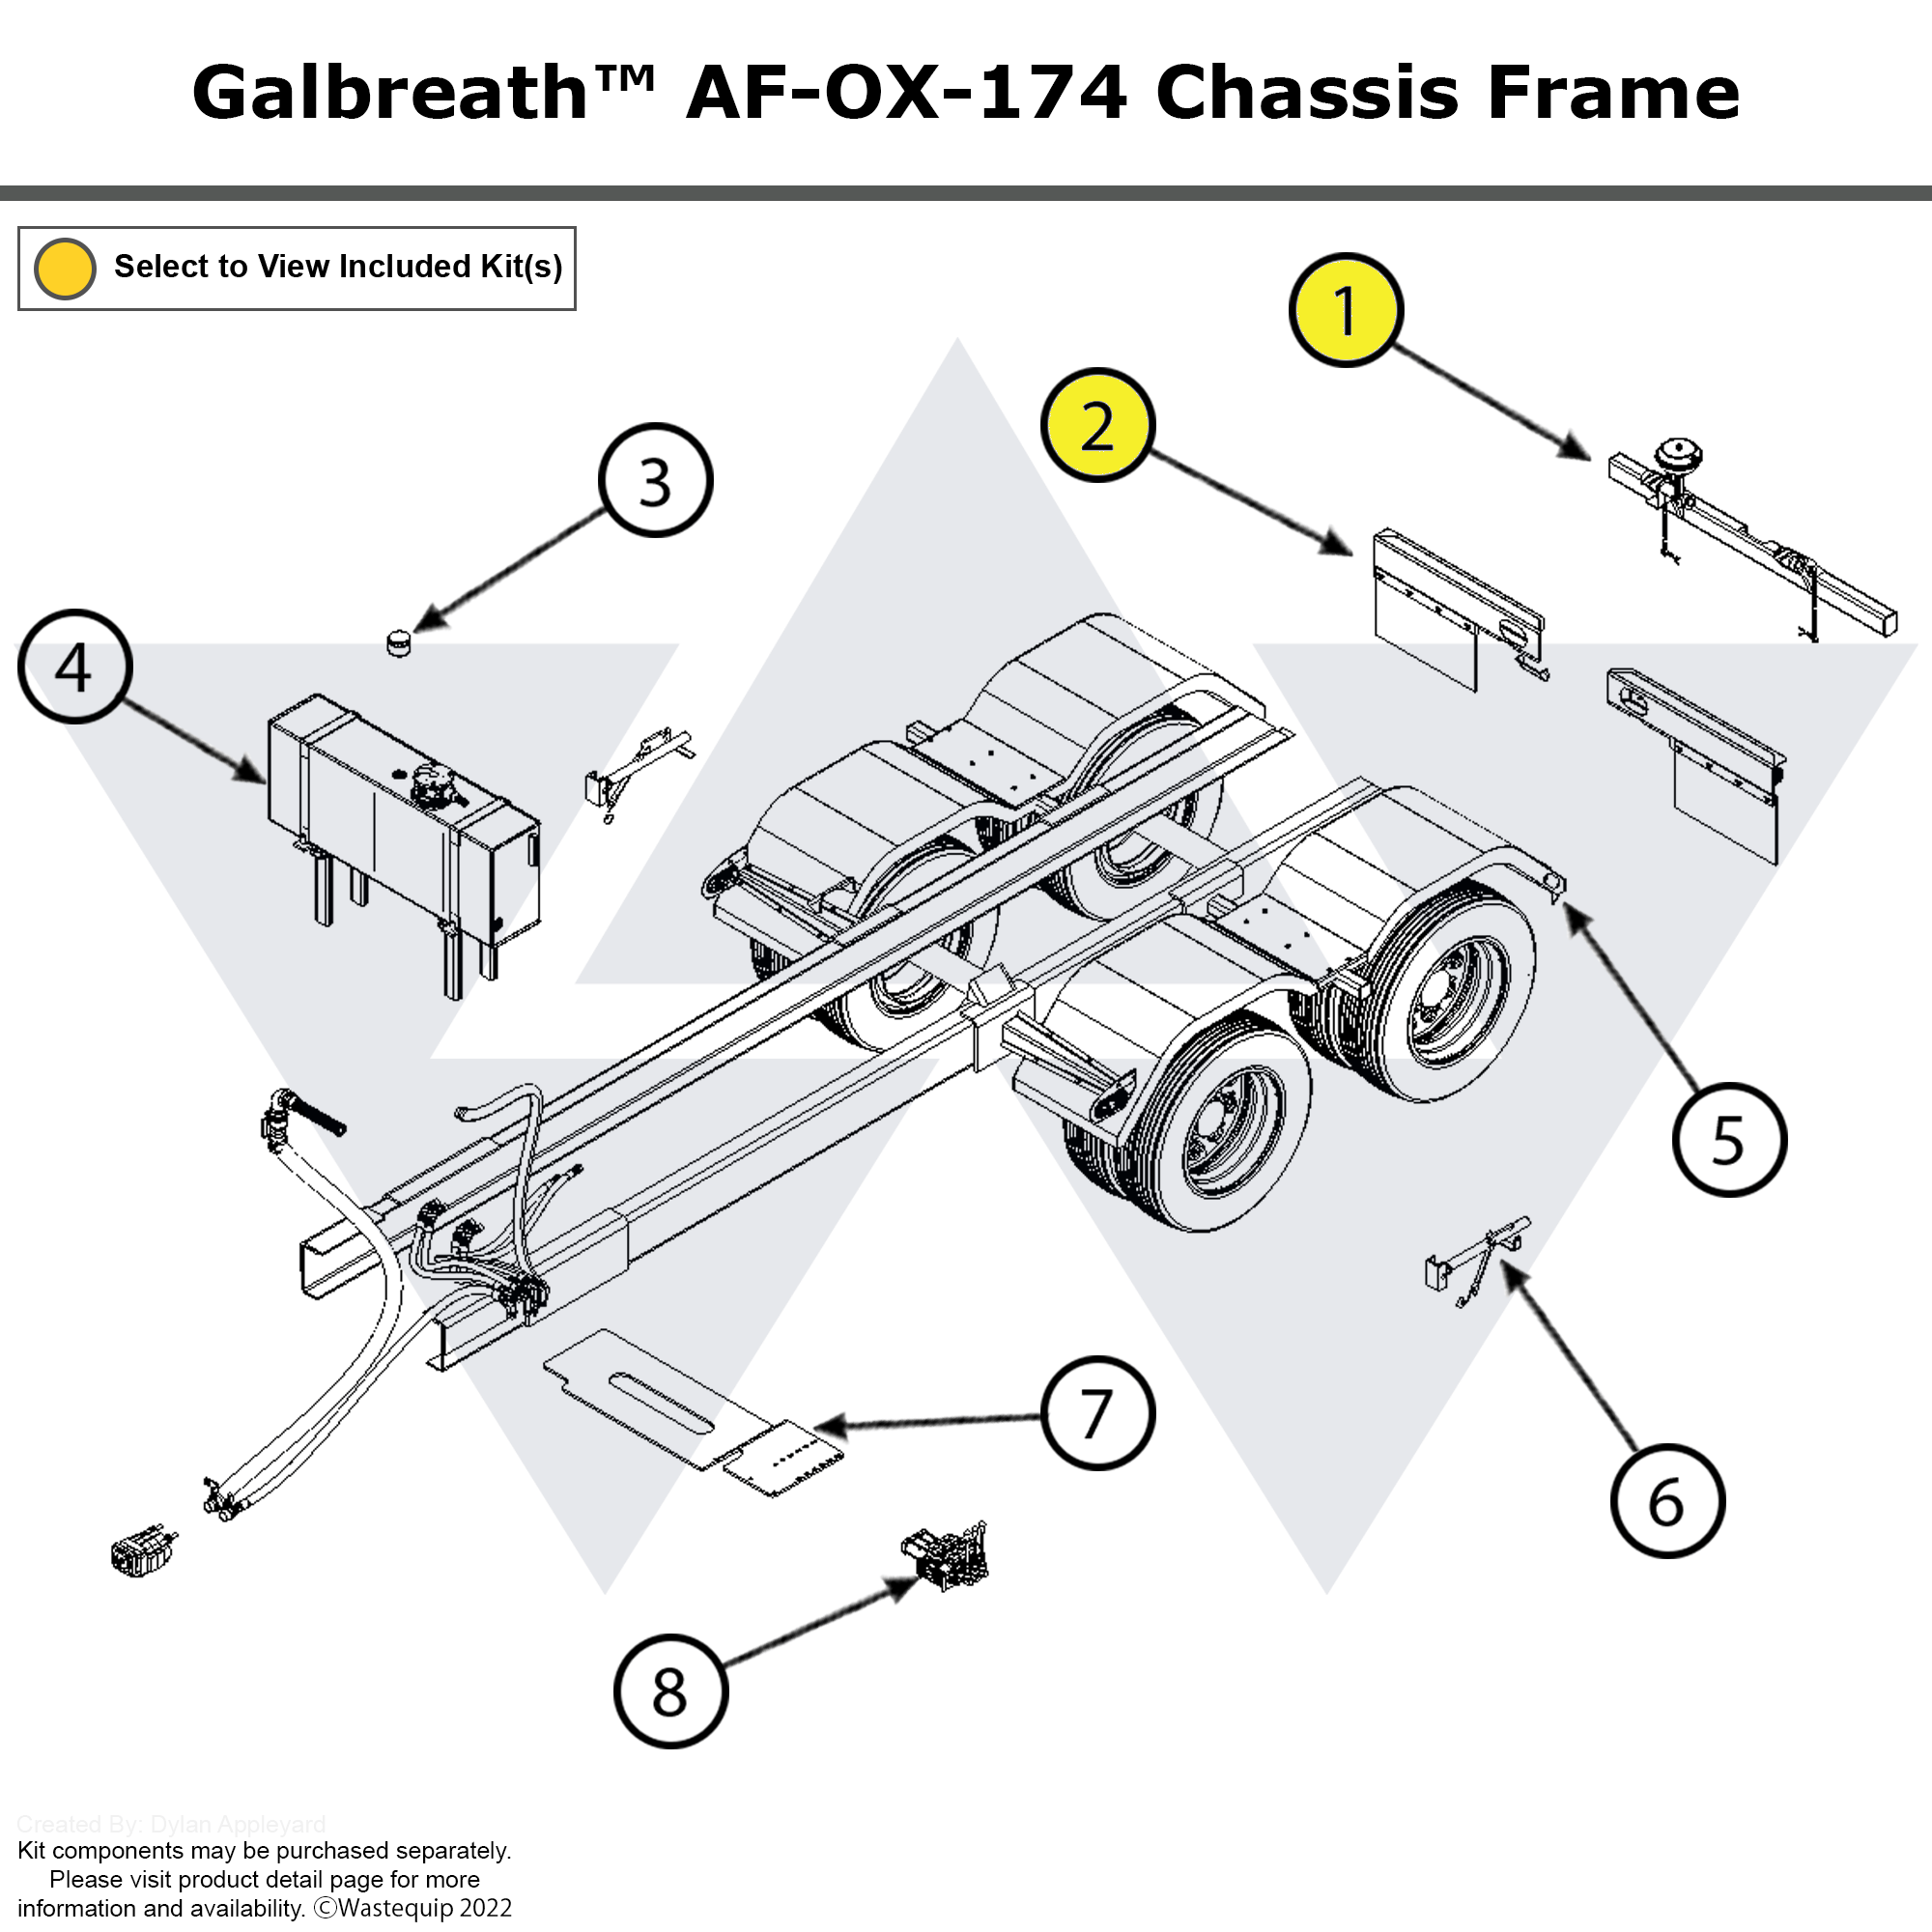 Galbreath™ Hoist AF-OX-174 Chassis Assembly